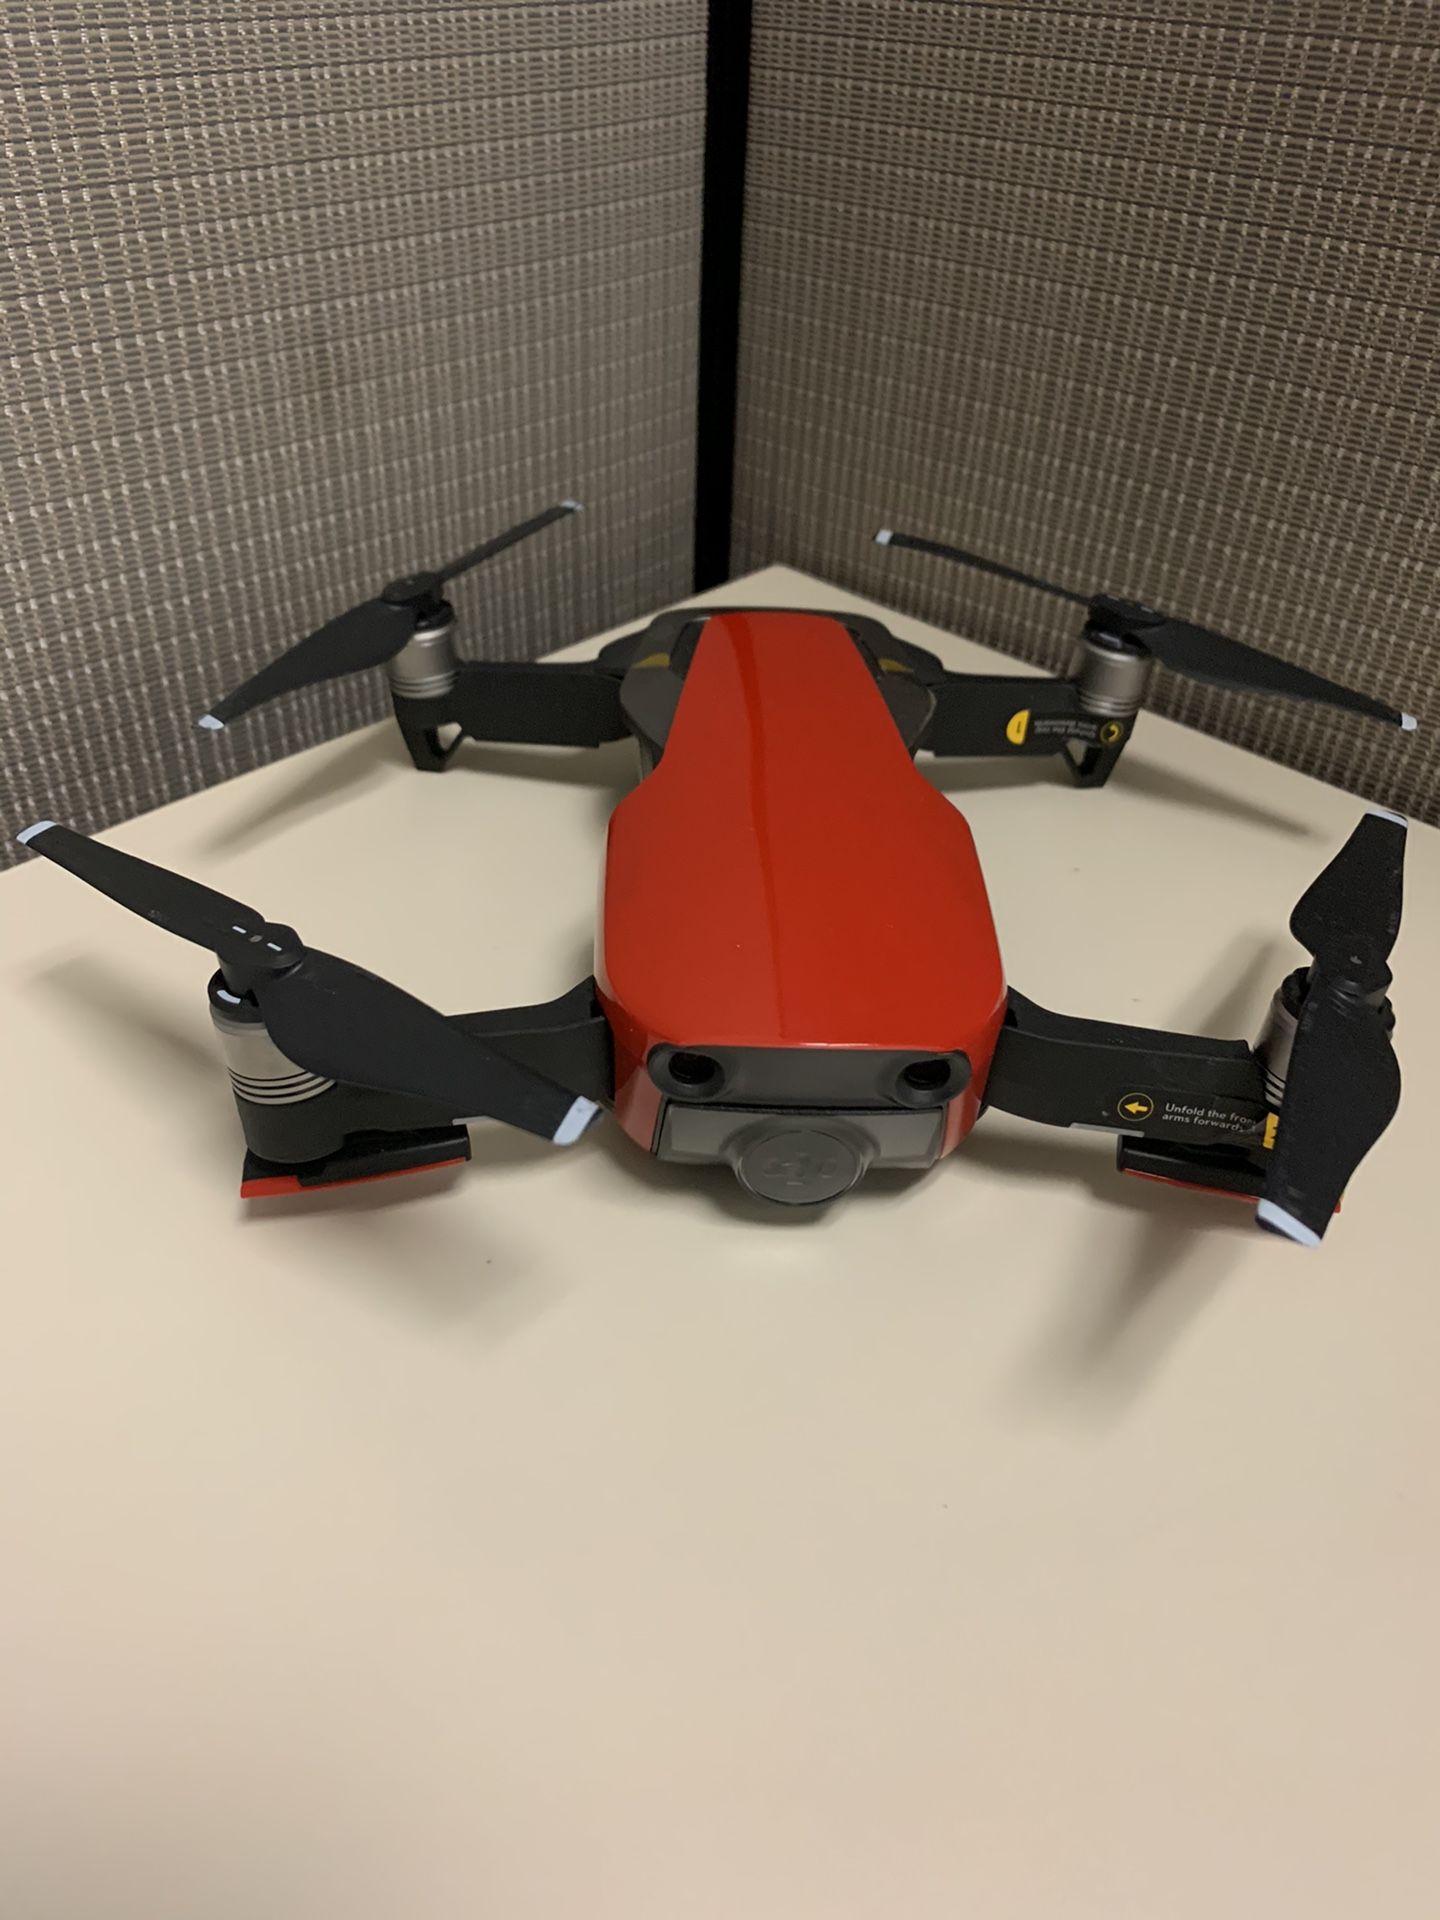 DJI Mavic Air, Flame Red Portable Quadcopter Drone